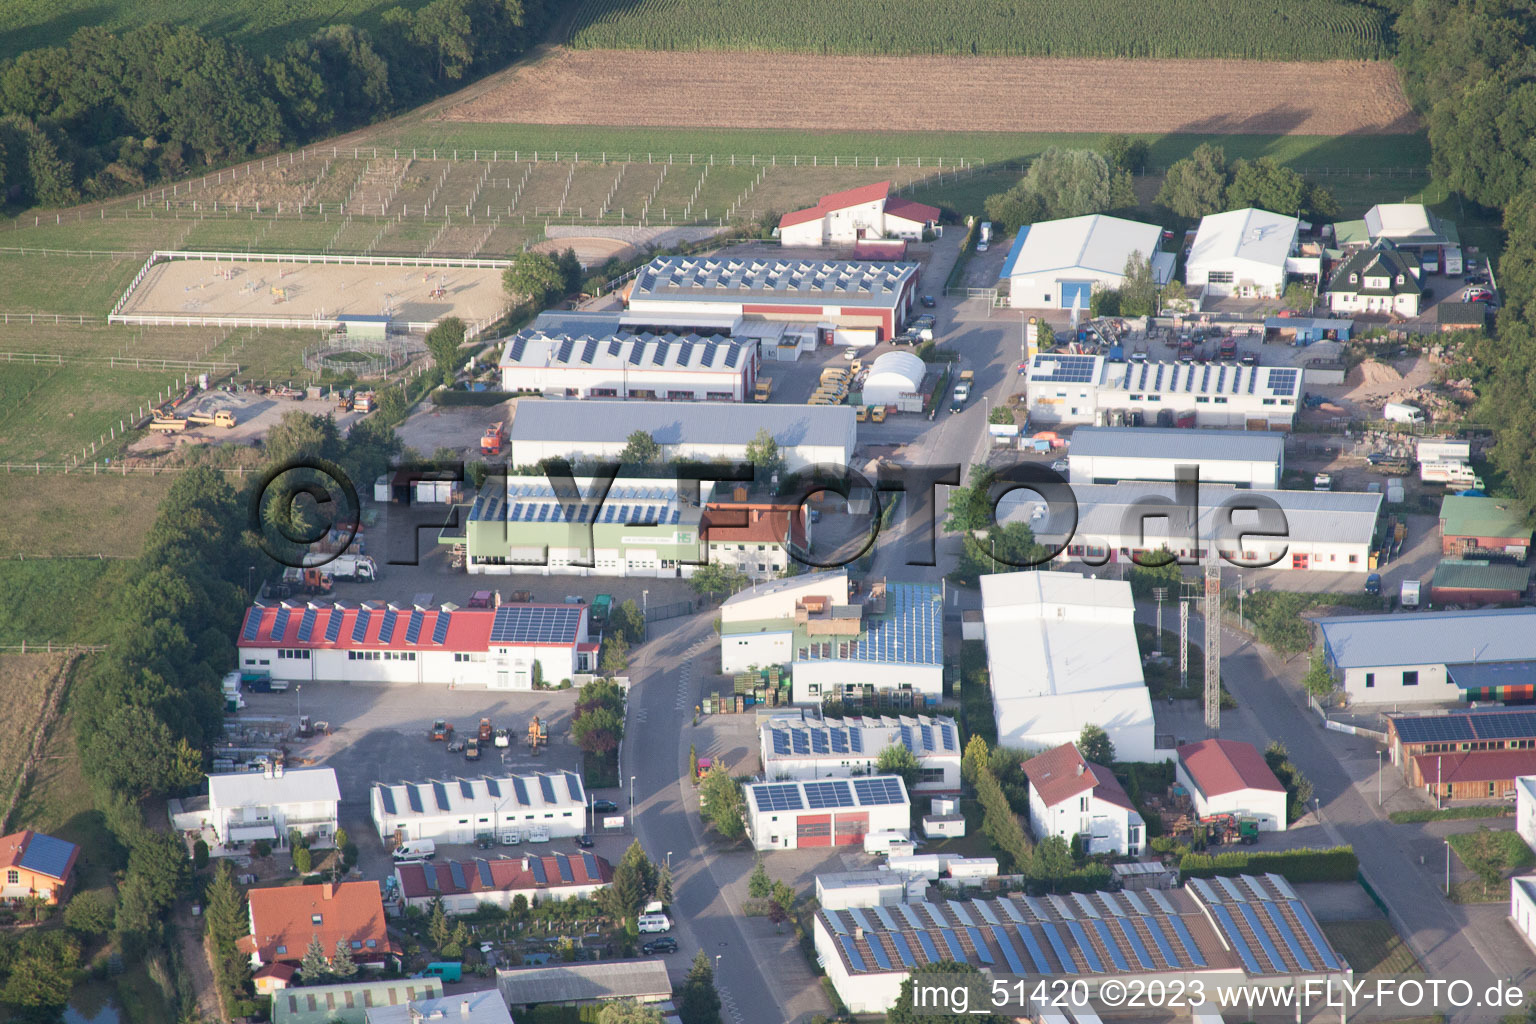 Drone image of Gäxwald industrial area in the district Herxheim in Herxheim bei Landau/Pfalz in the state Rhineland-Palatinate, Germany